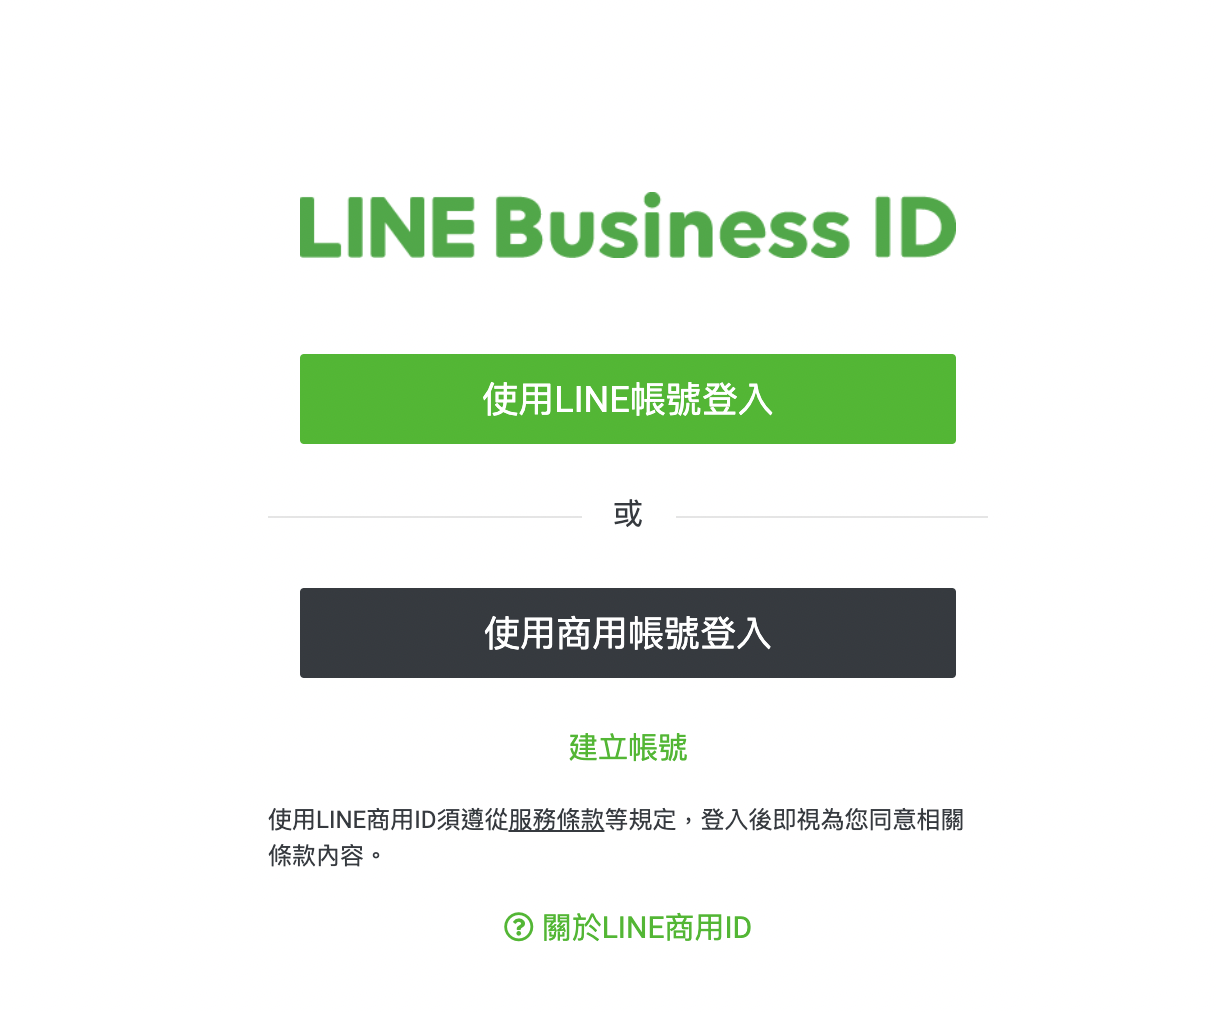 LINE Business ID可以選擇使用LINE帳號登入，或是使用商用帳號登入